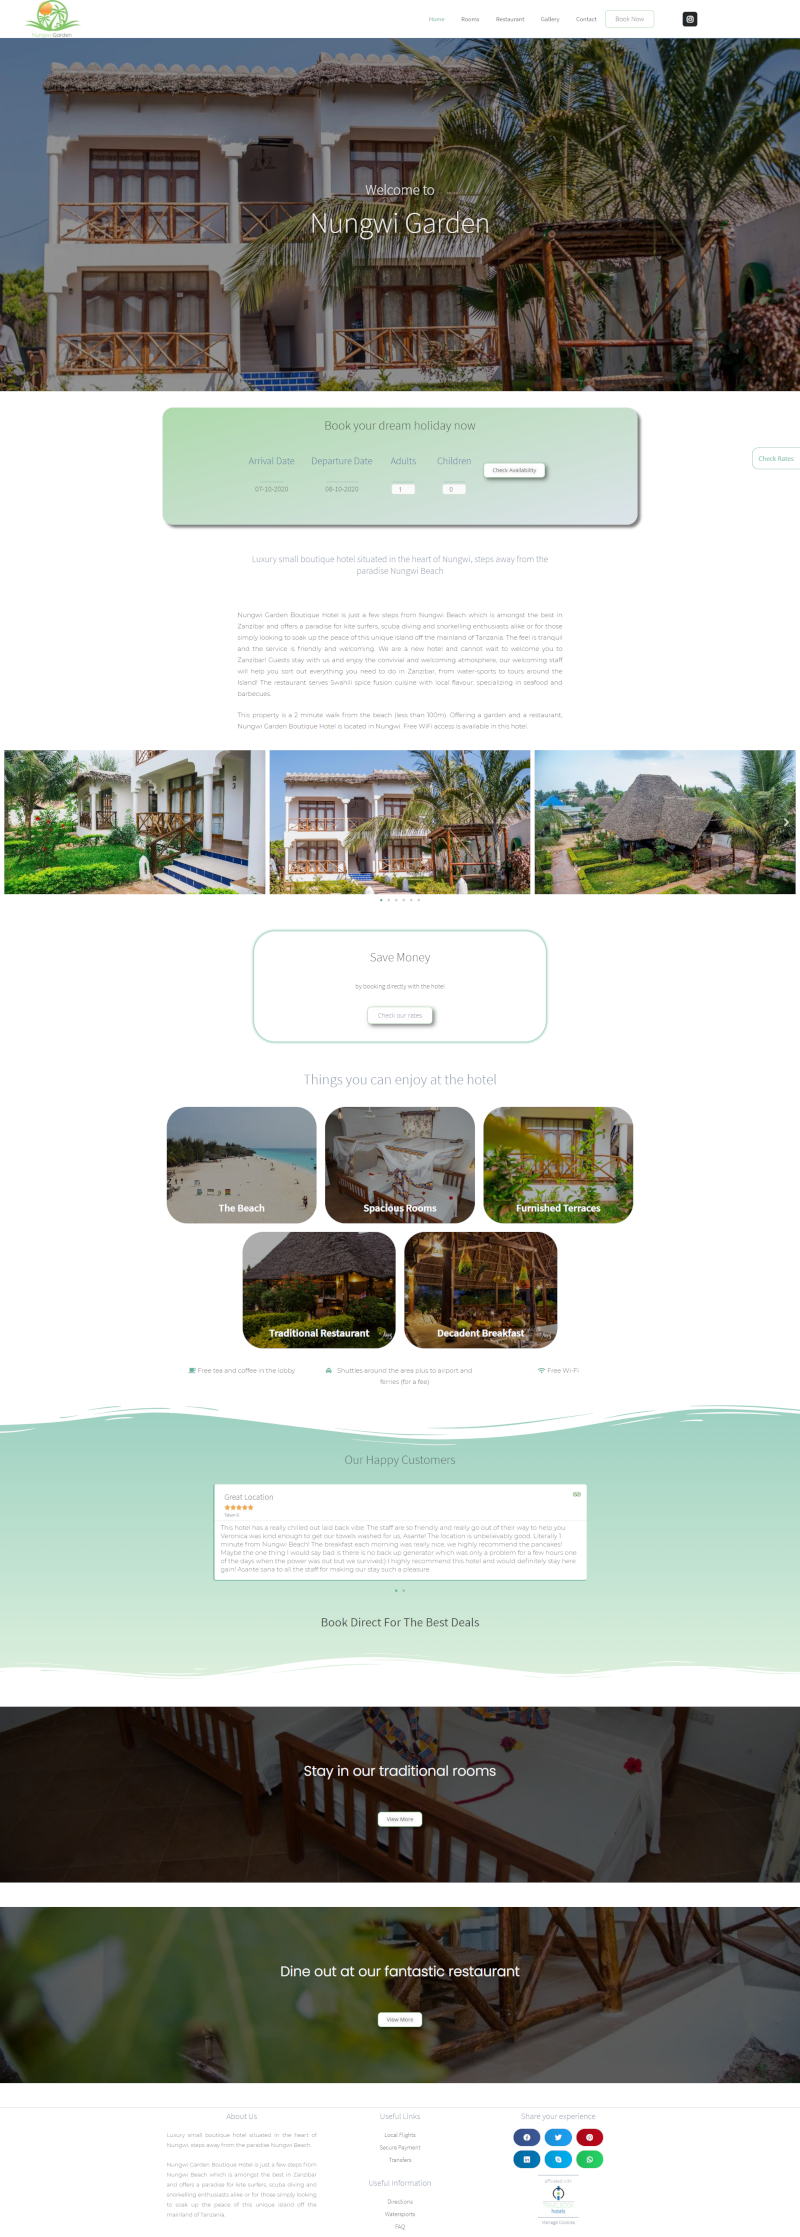 Desktop design for Nungwi Garden Boutique Hotel